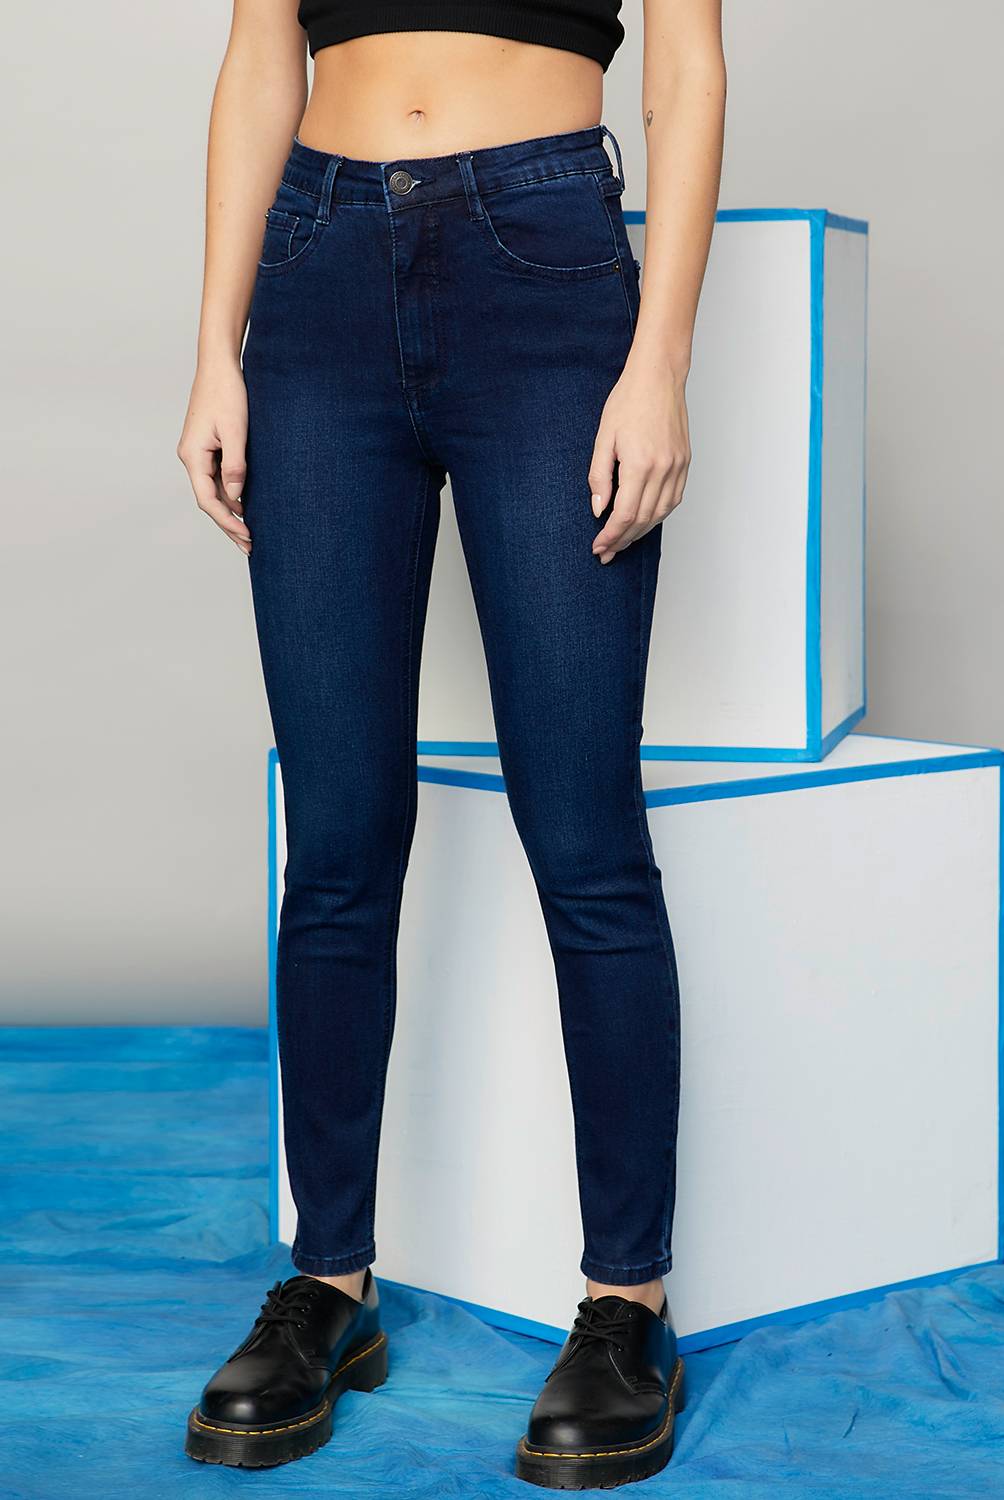 AMERICANINO - Jeans Skinny Tiro Alto Mujer Americanino